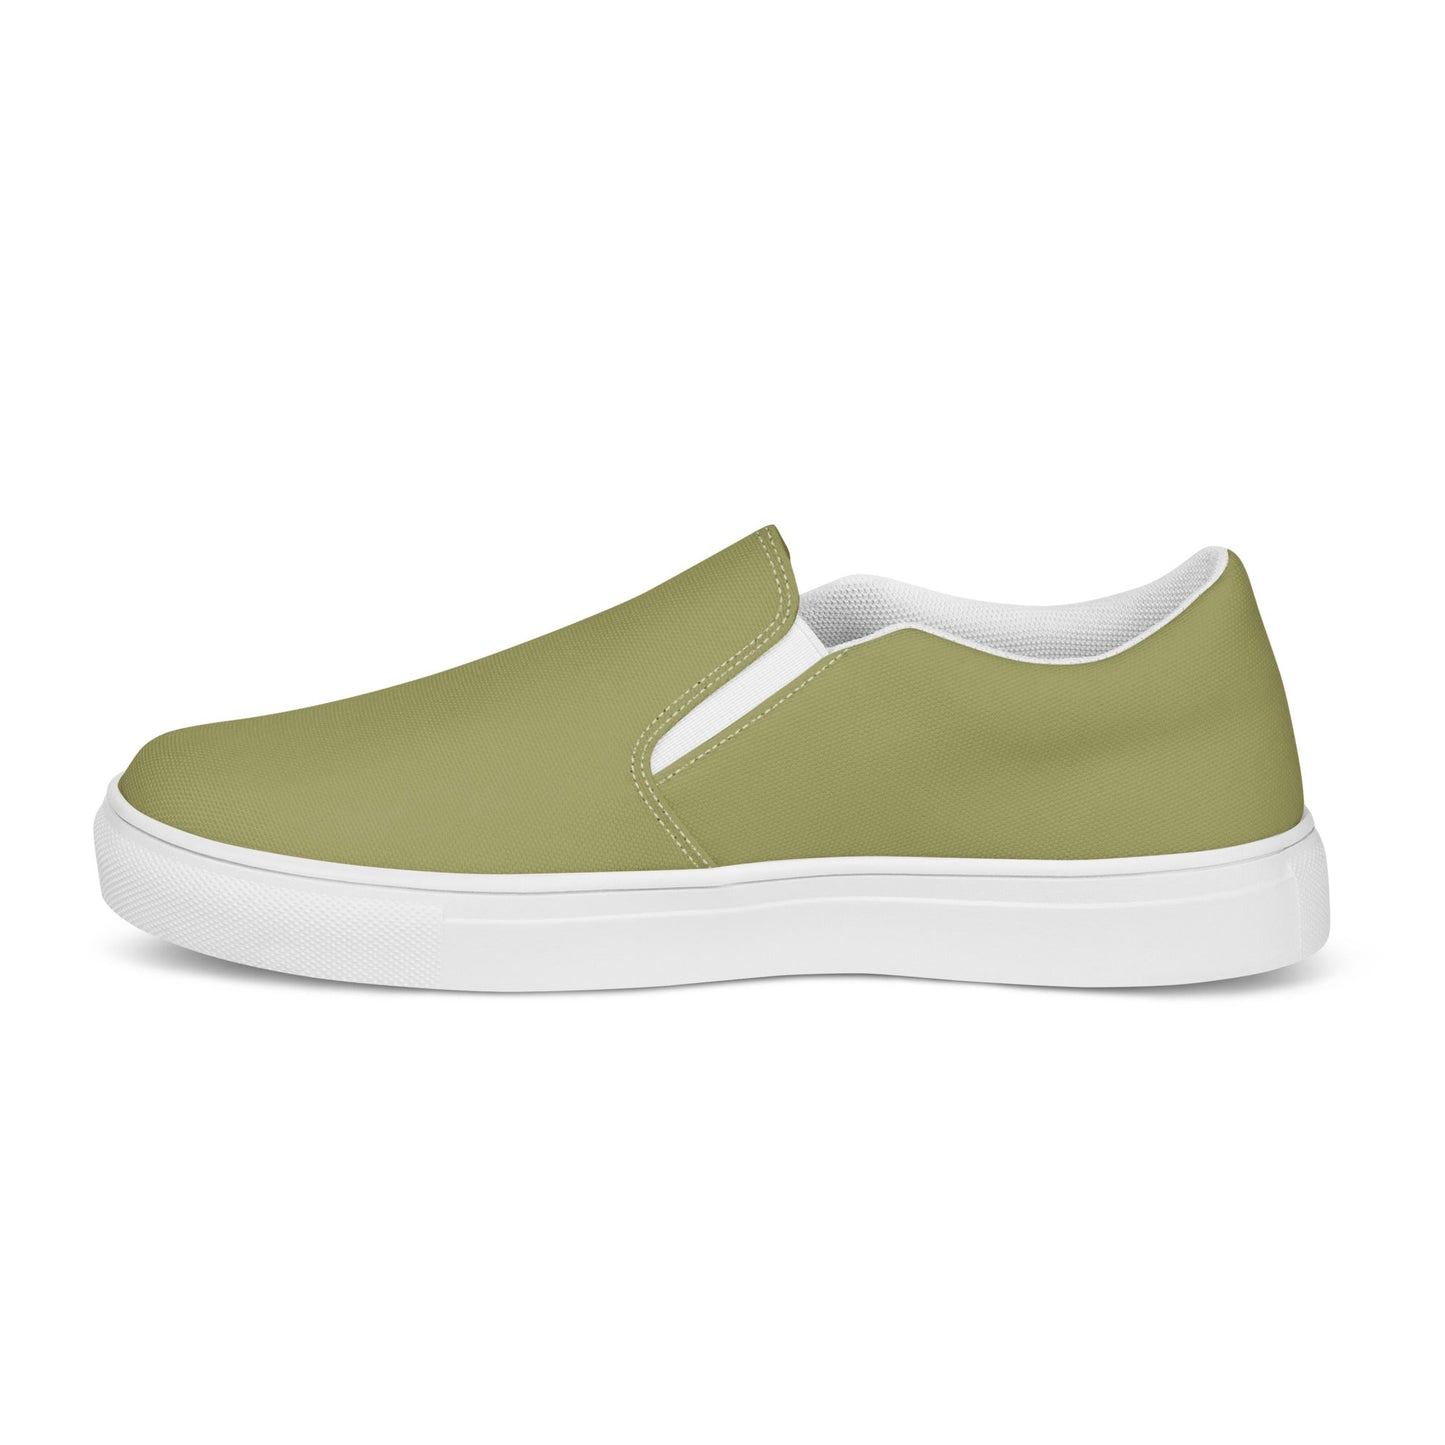 klasneakers Men’s slip-on canvas shoes - Light Moss